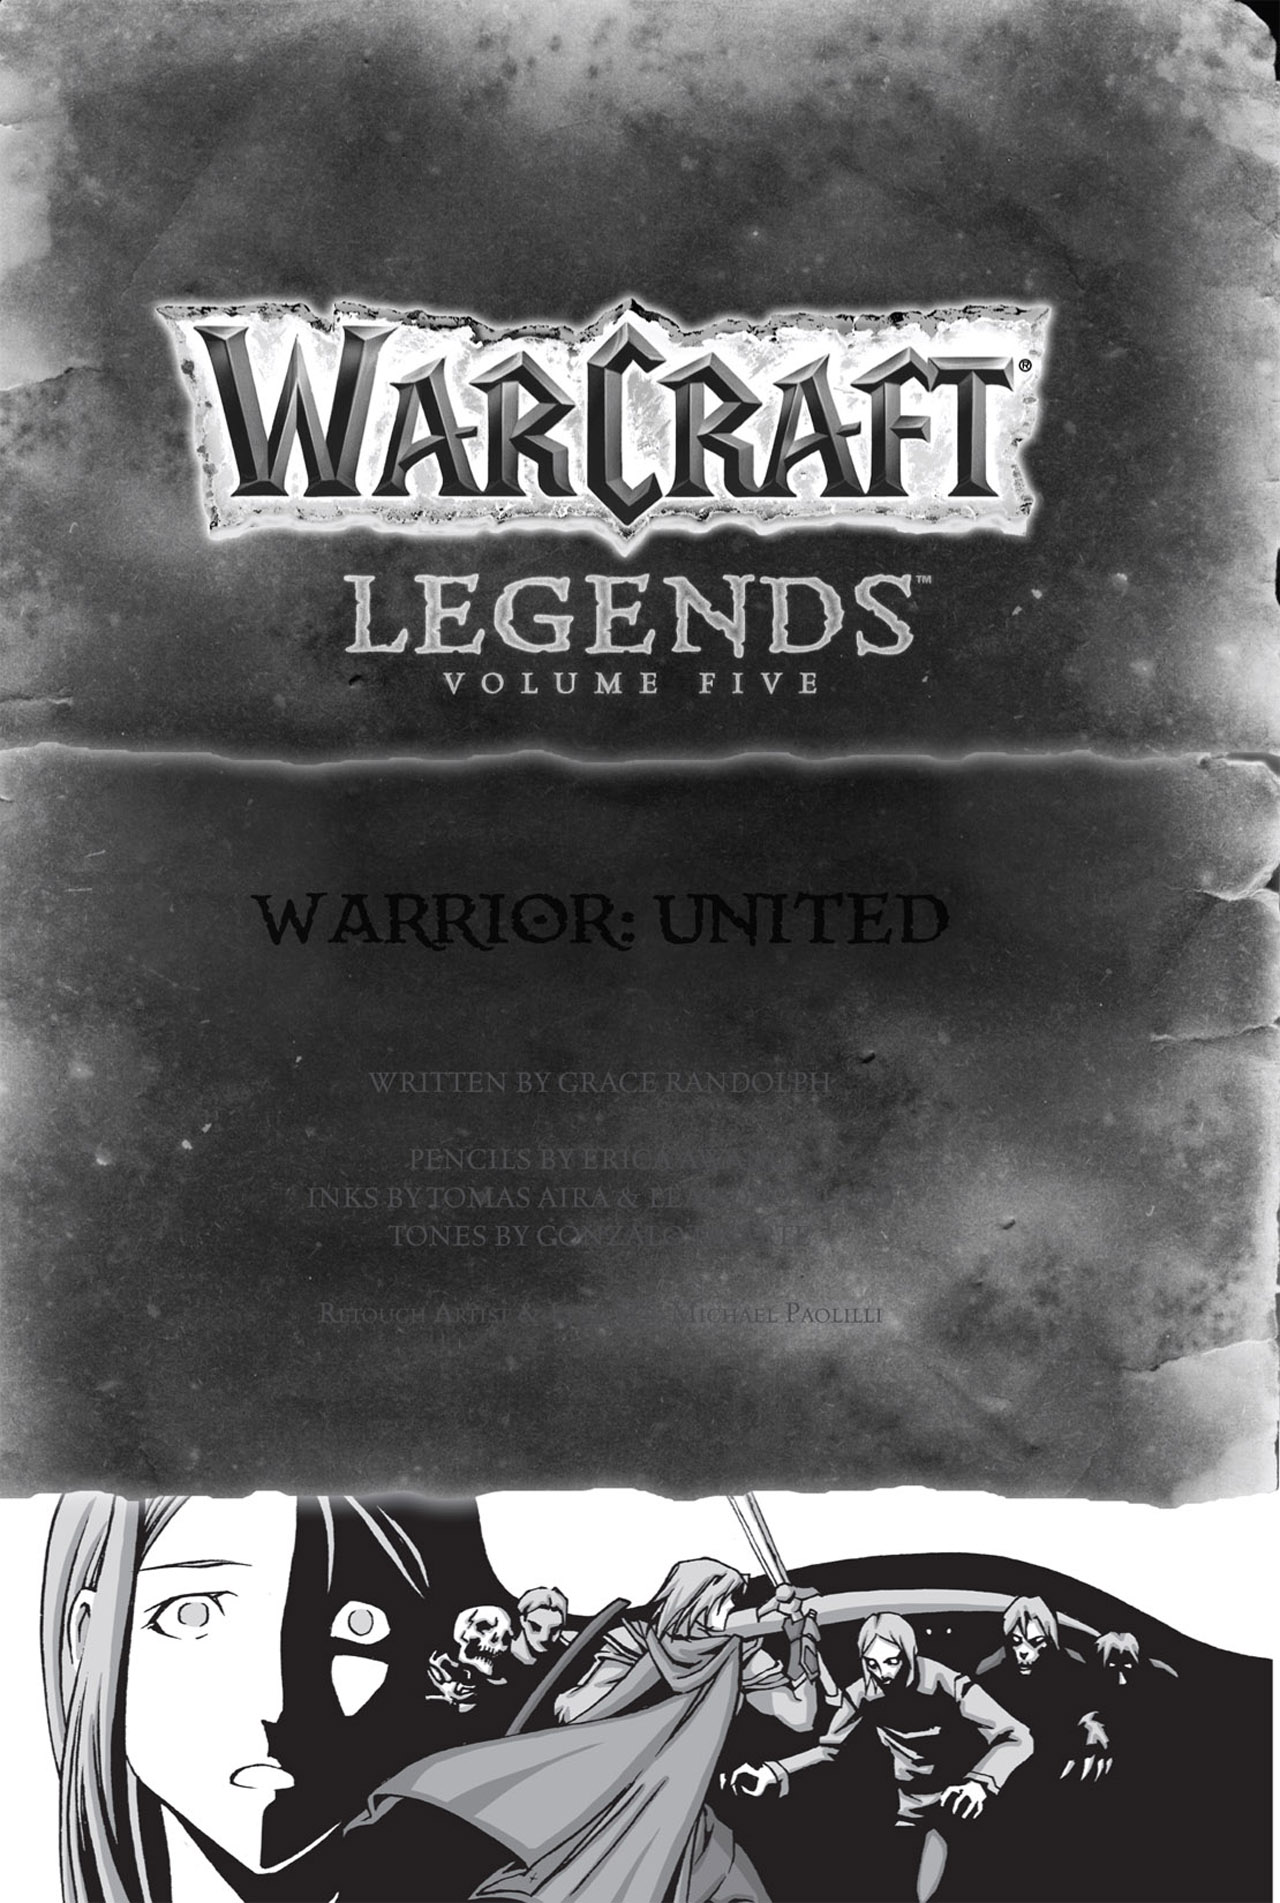 Read online Warcraft: Legends comic -  Issue # Vol. 5 - 29